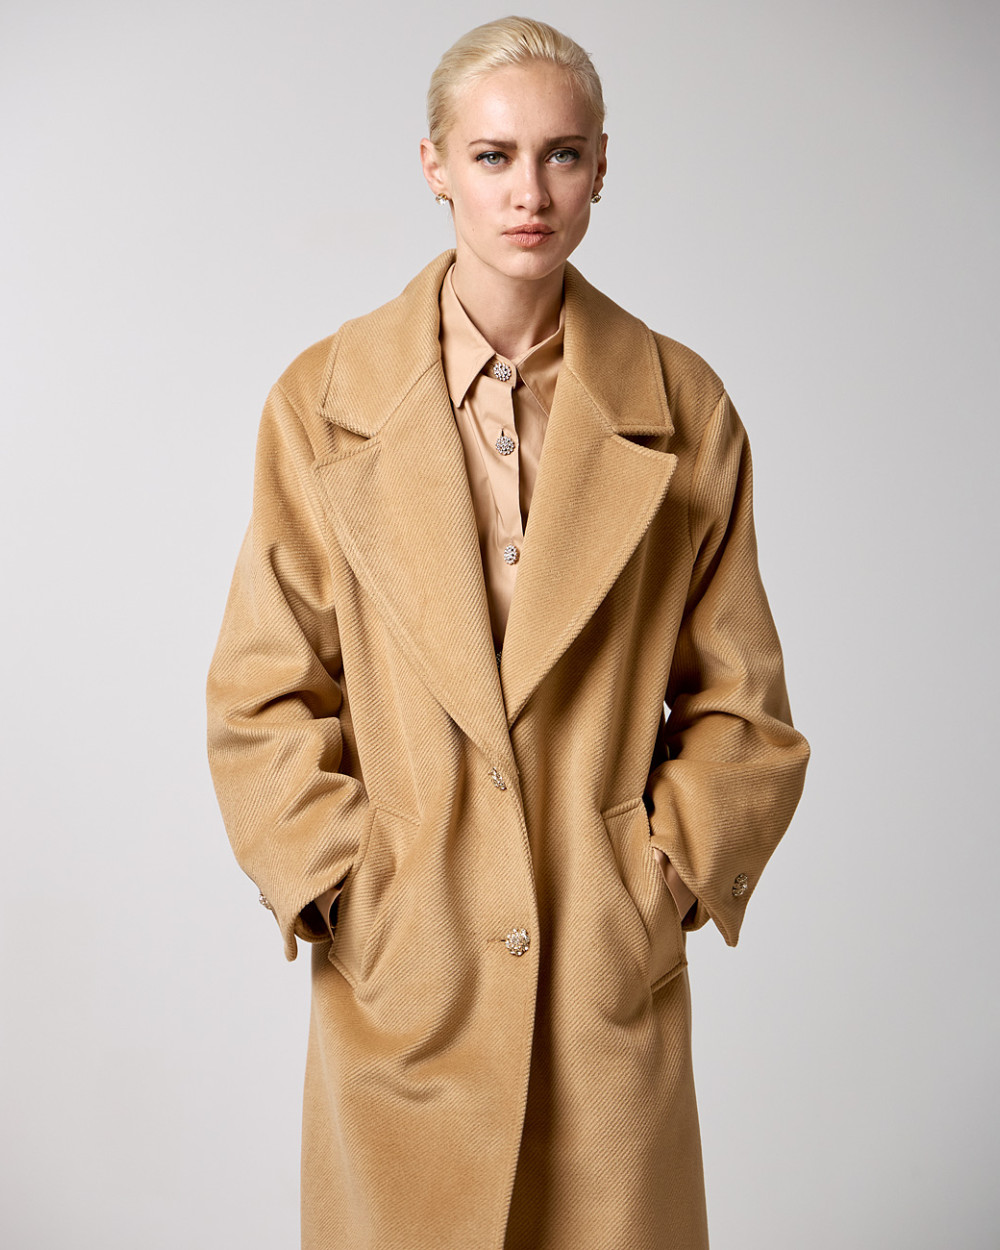 Coat with rhinestone - Access Fashion - Brouska